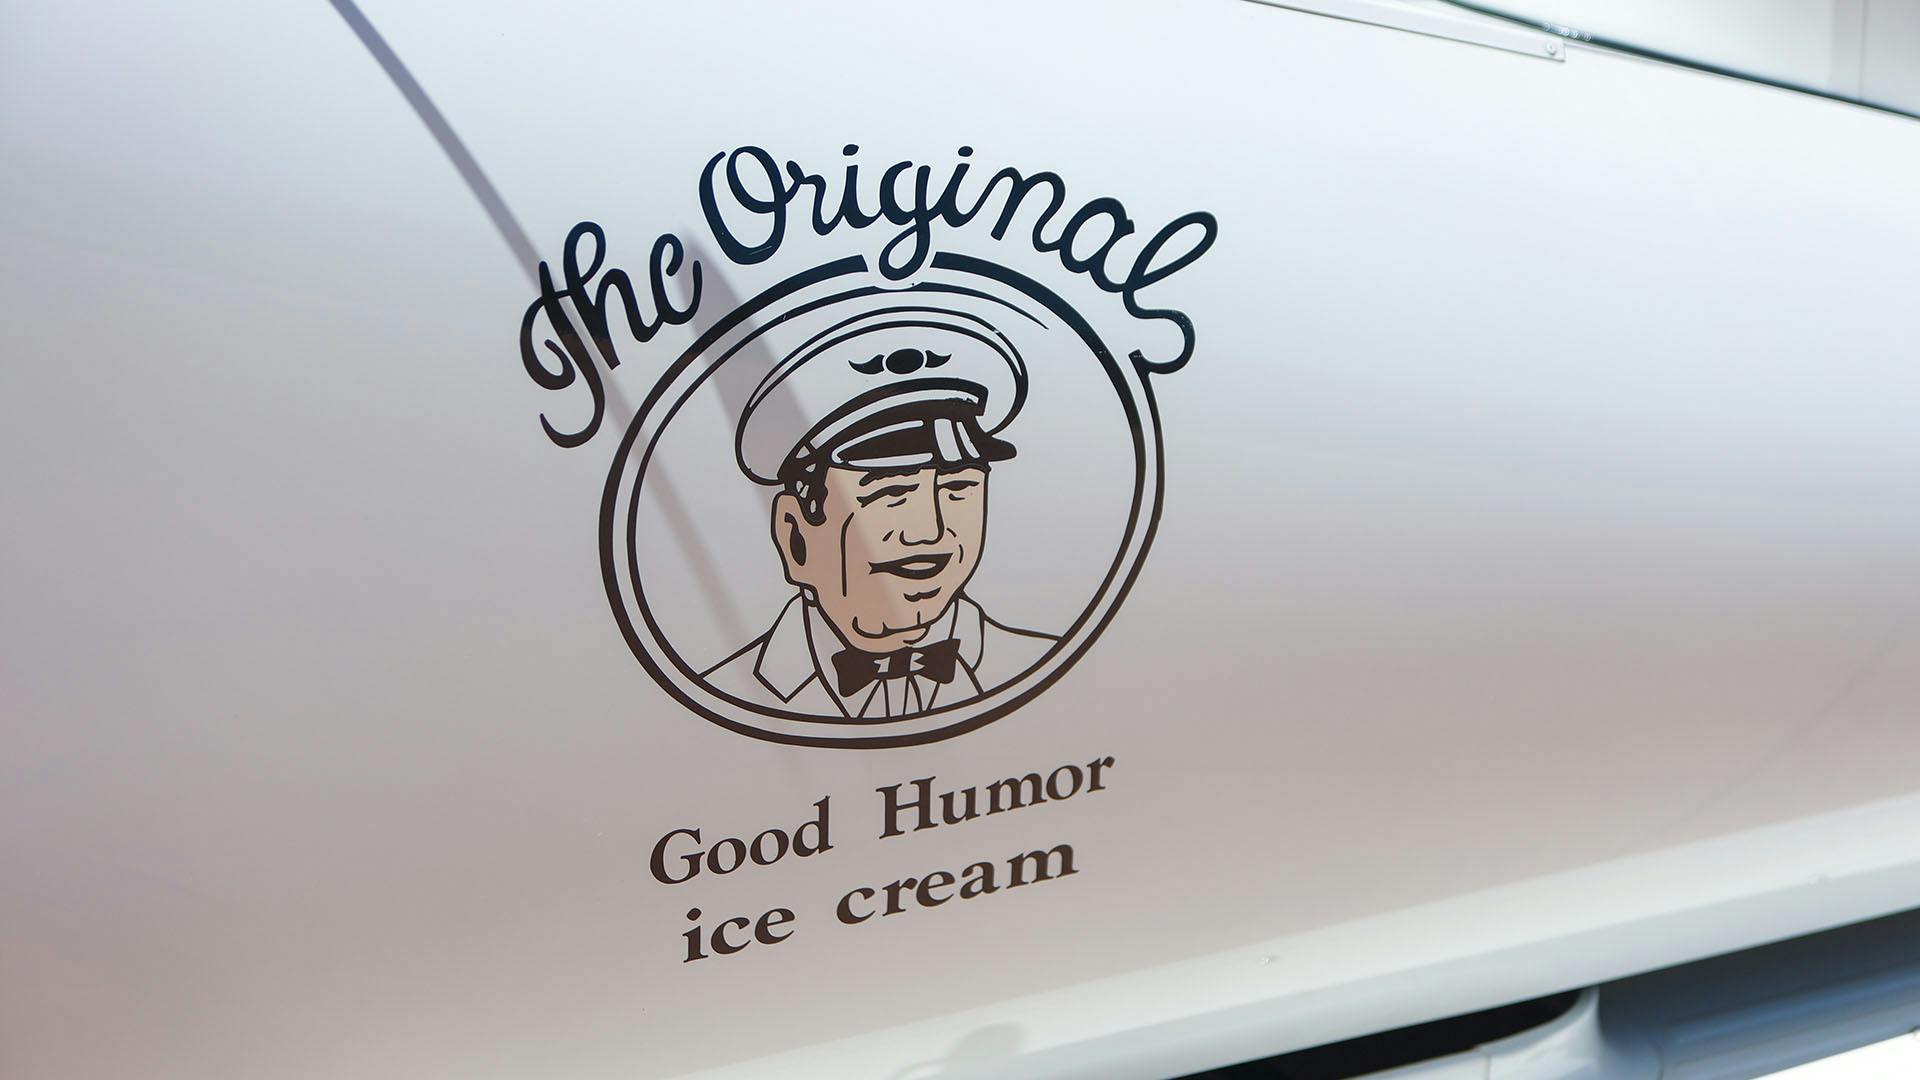 Good Humor Ice Cream Truck company decal